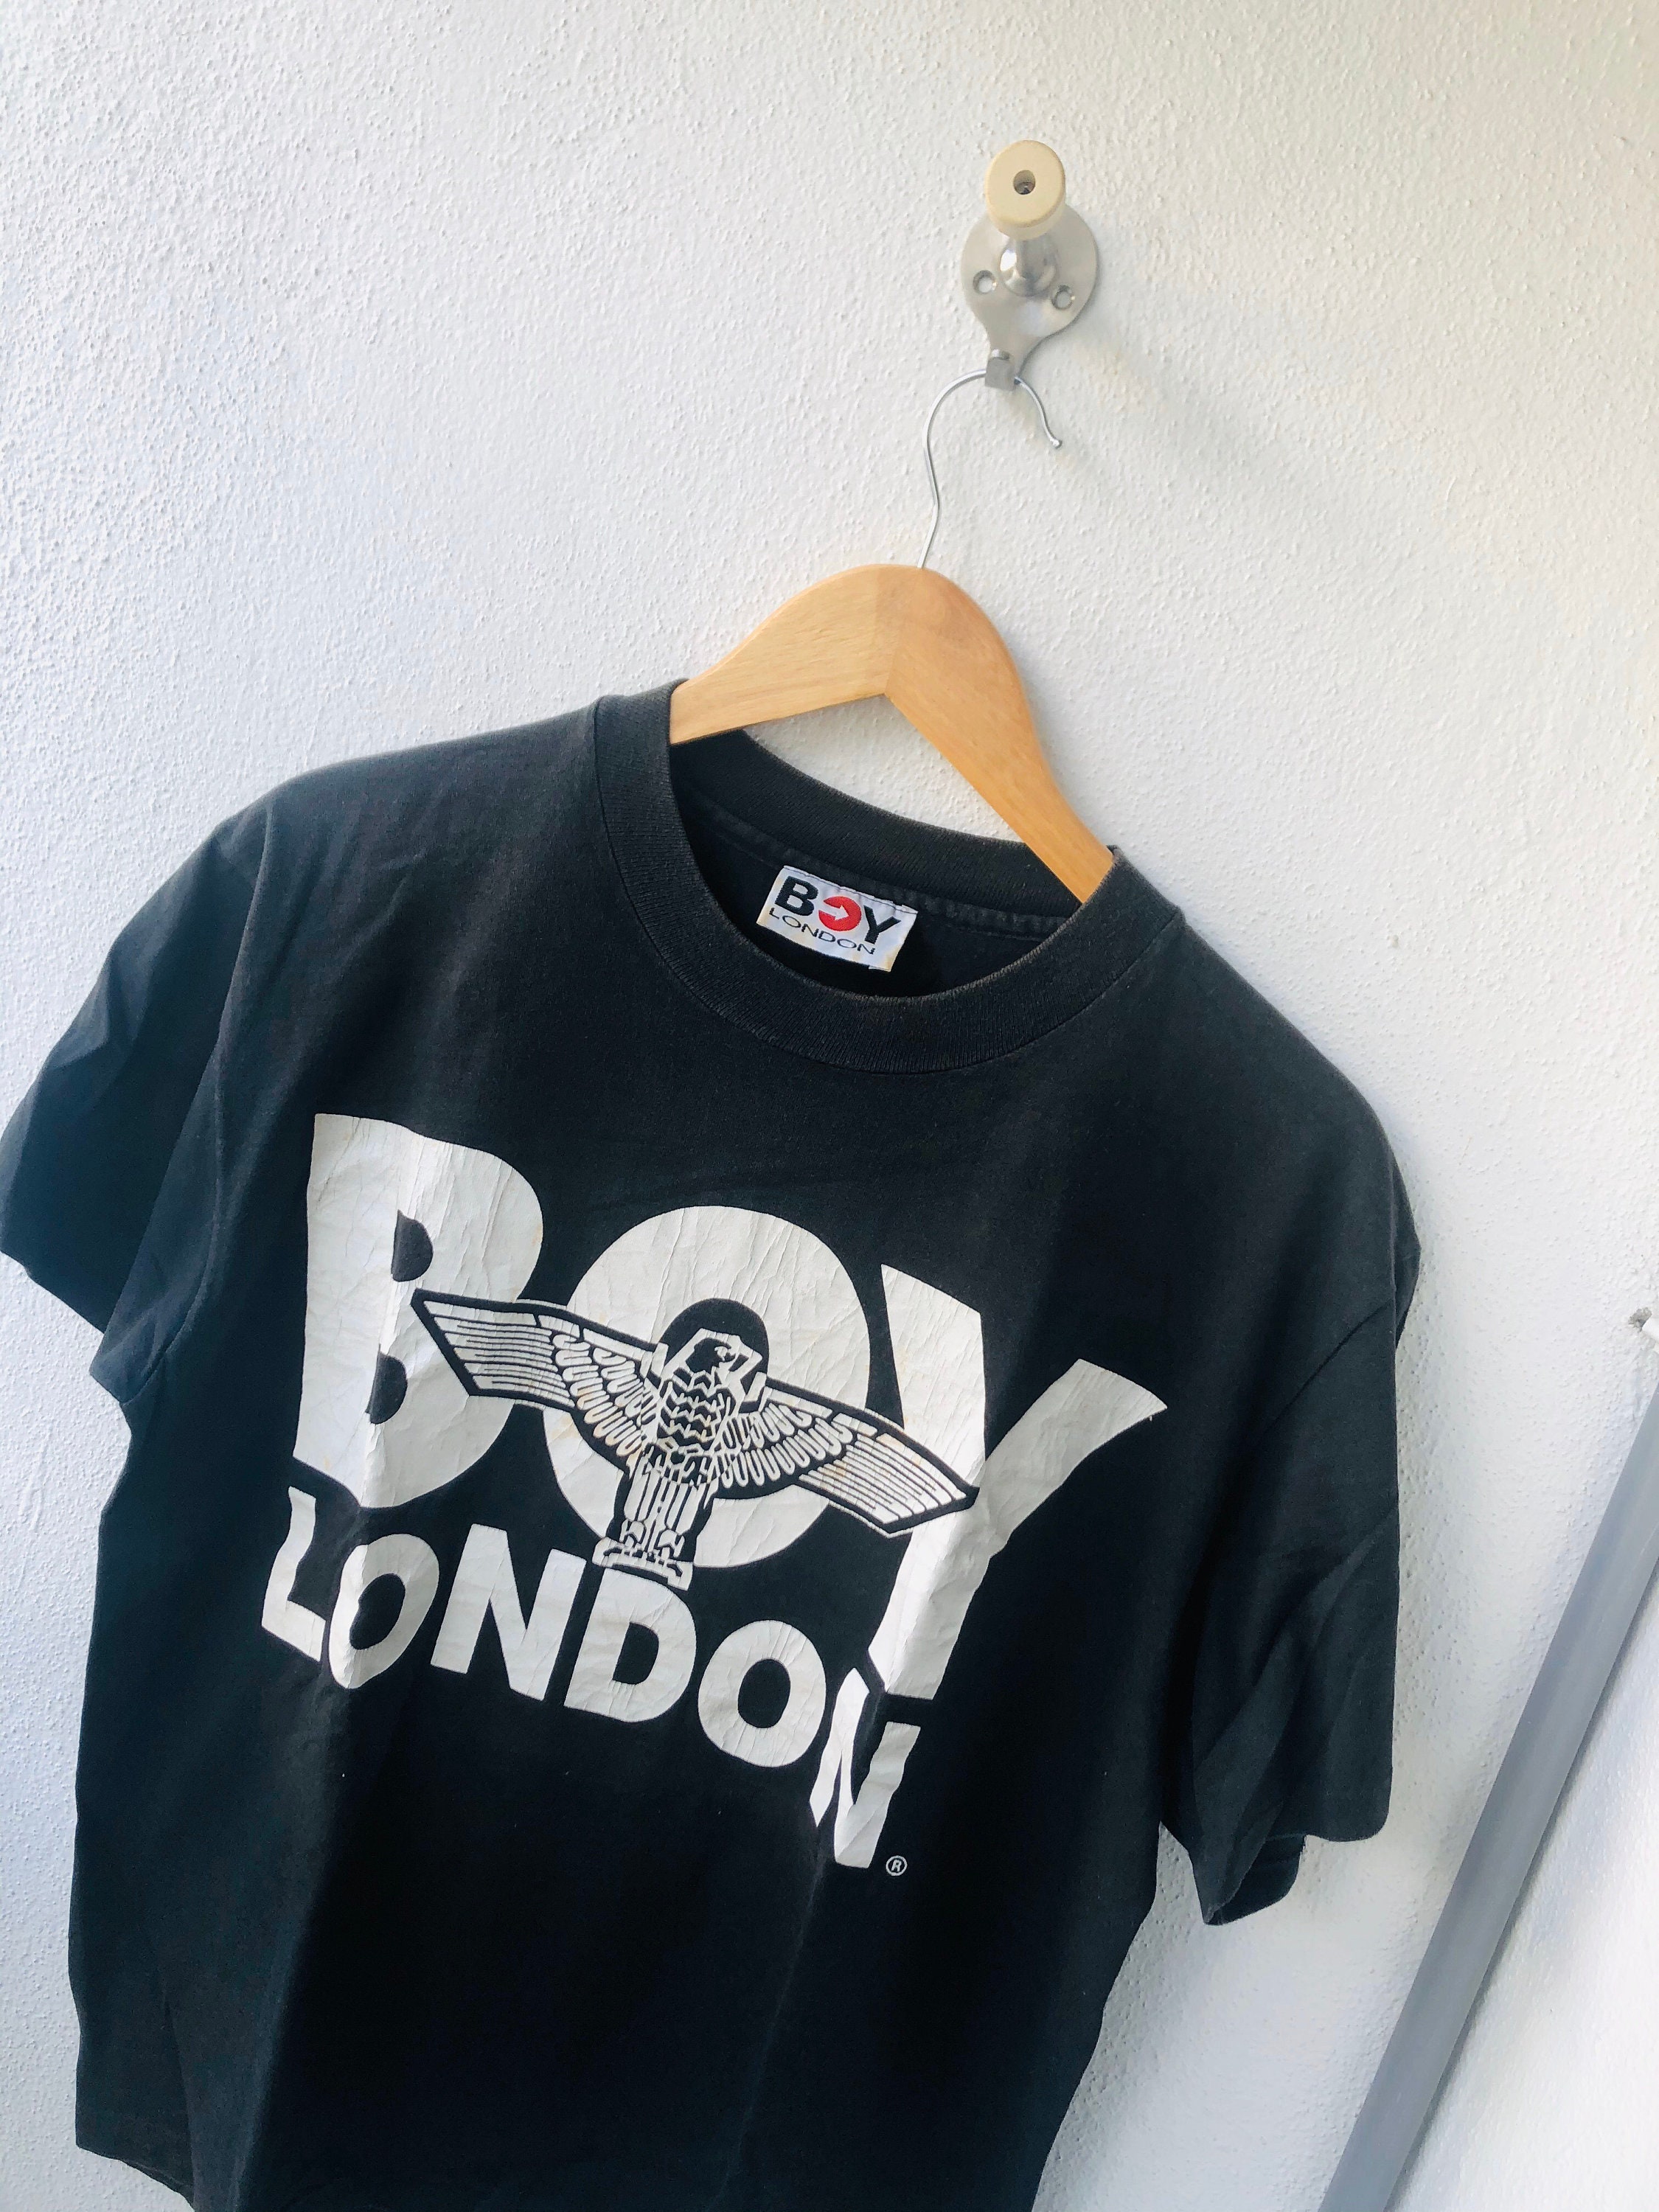 Vintage Original 90's Boy London Big Boy London | Etsy